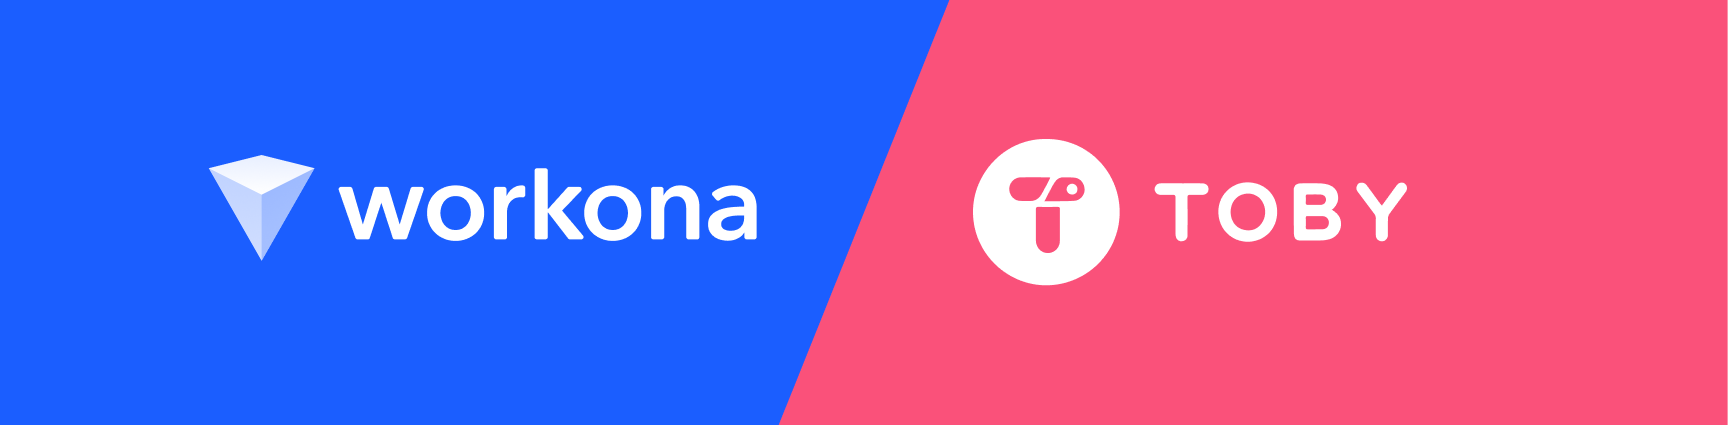 Workona logo on blue background facing off against Toby logo on pink background